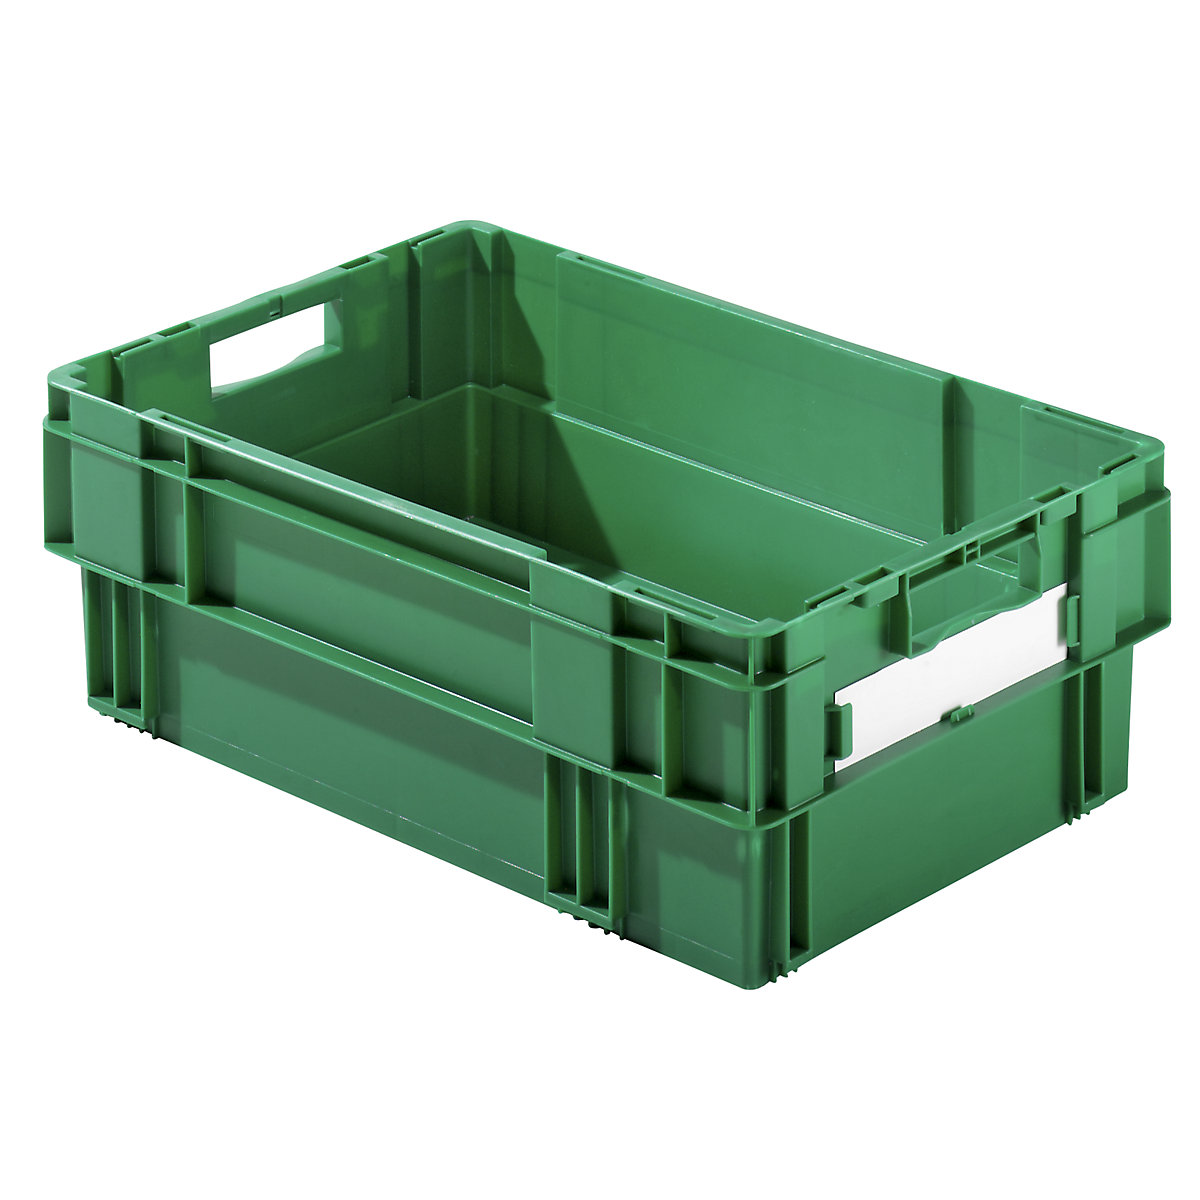 Stacking box, capacity 37 litres, solid walls and base, pack of 4, green